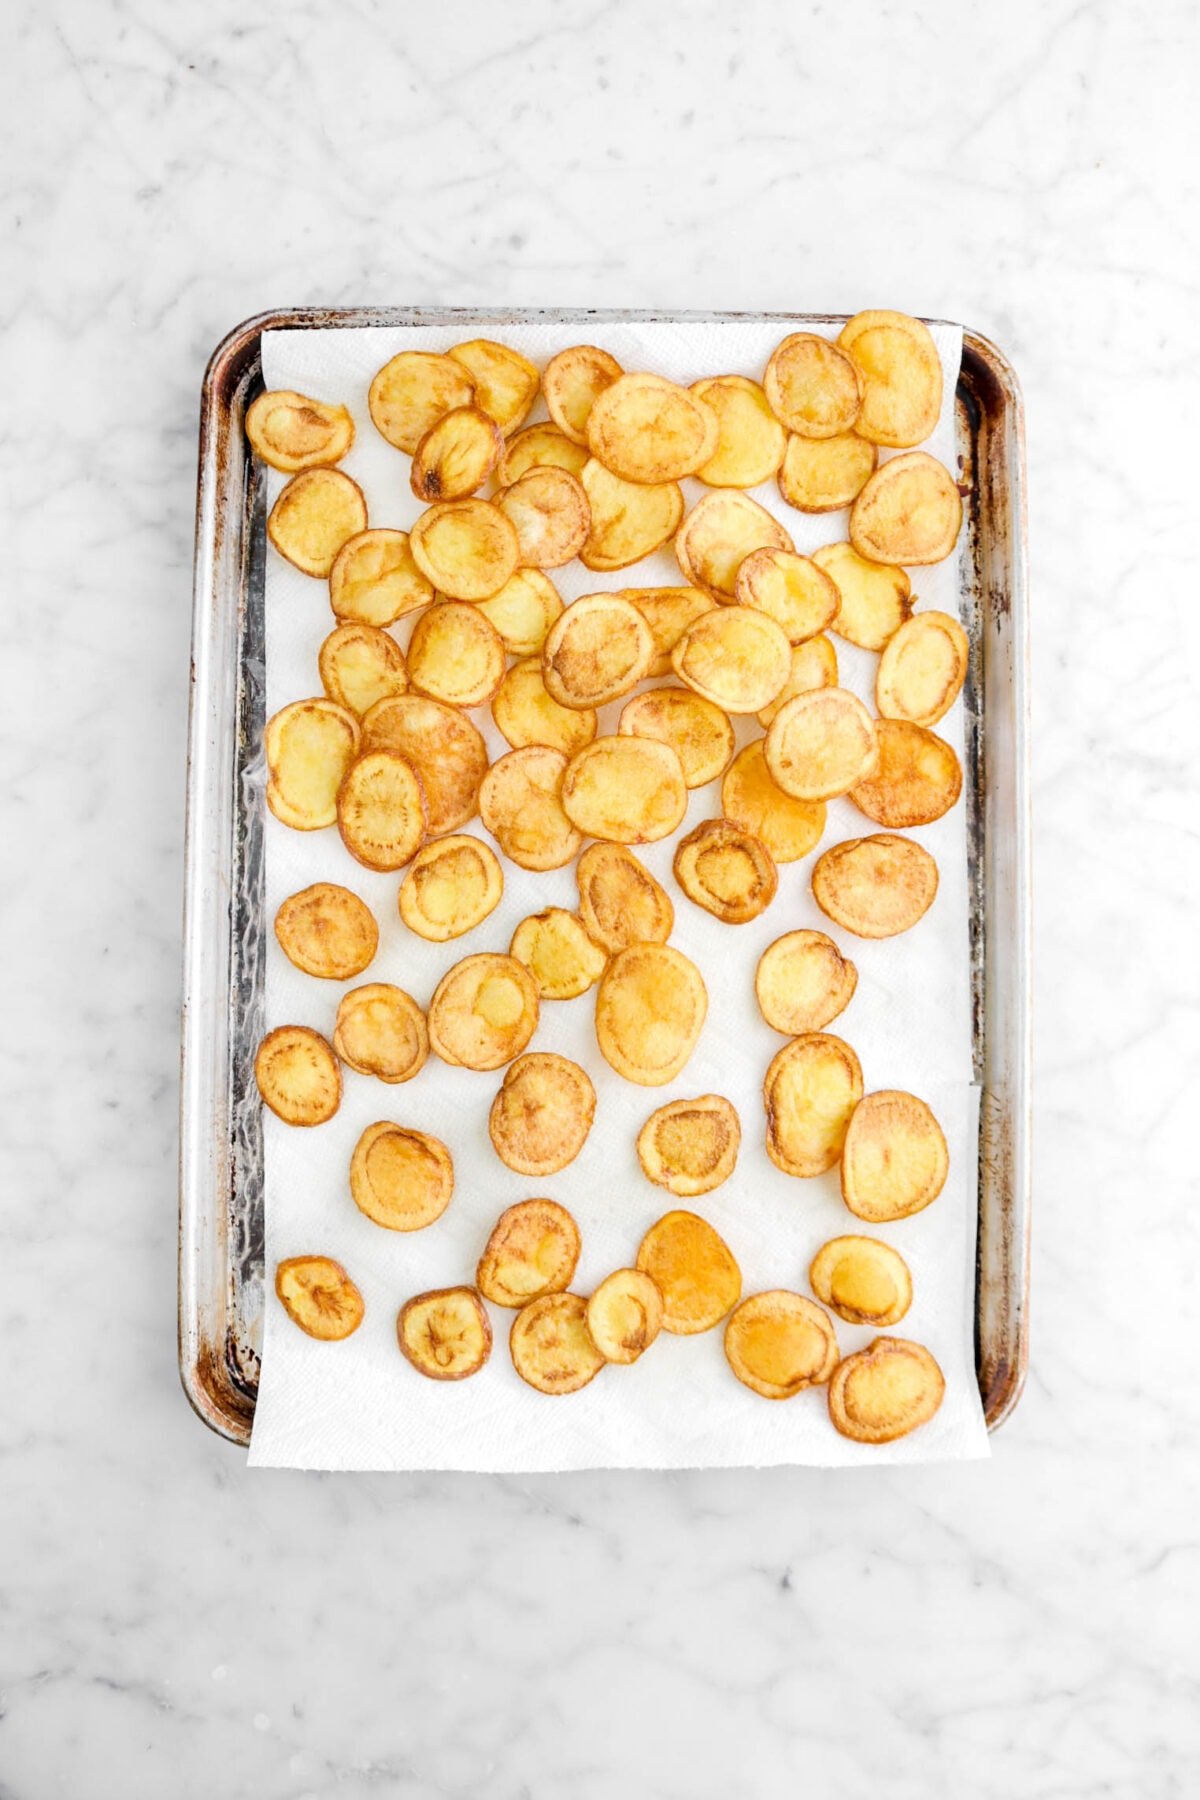 fried potato chips on sheet pan